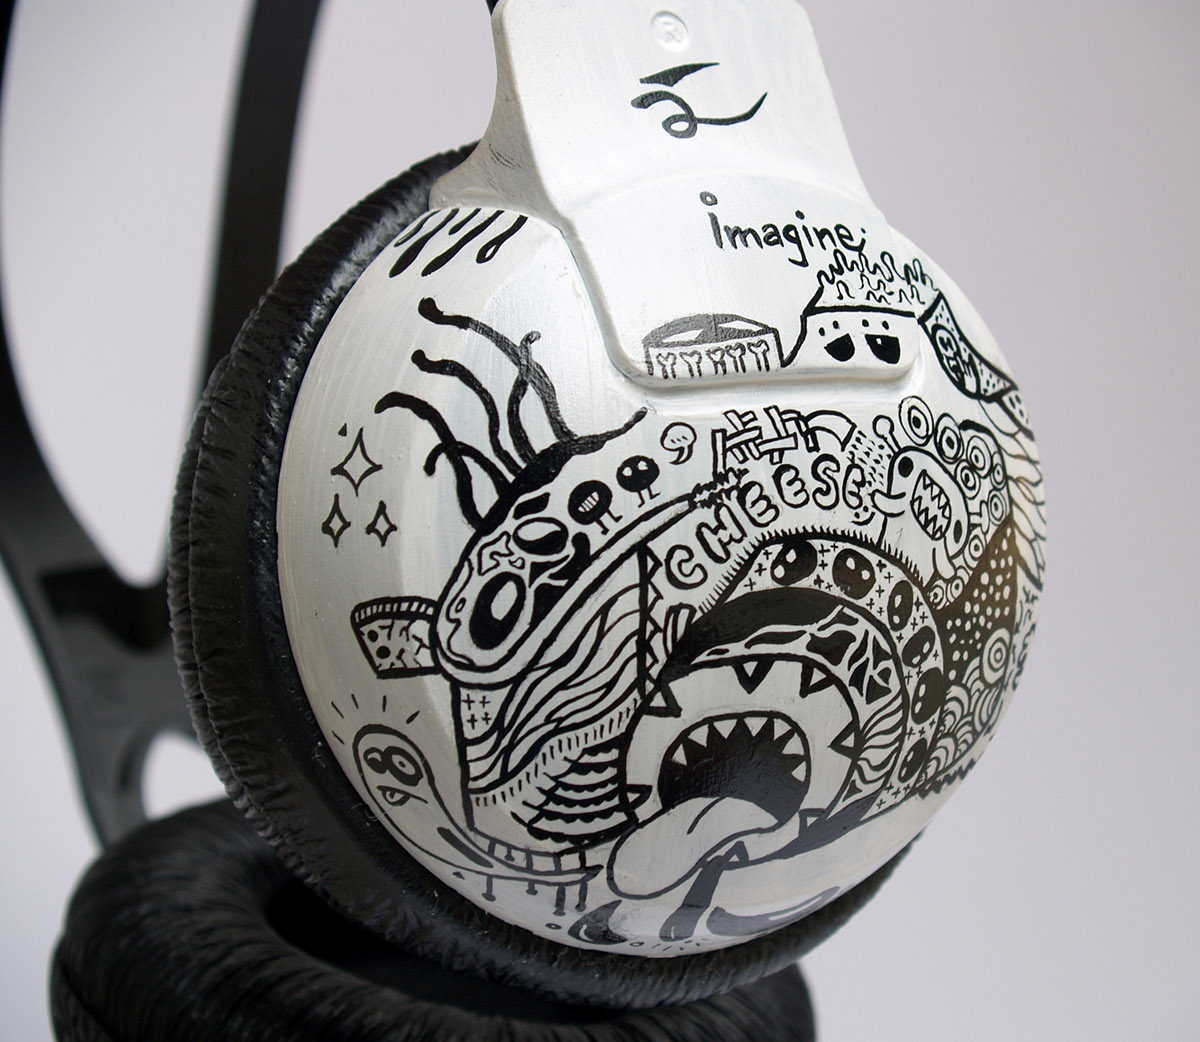 custommade customized doodle doodlework camera headphones phillips shoedup shoedupbyrahul fine art handpainted brushwork art